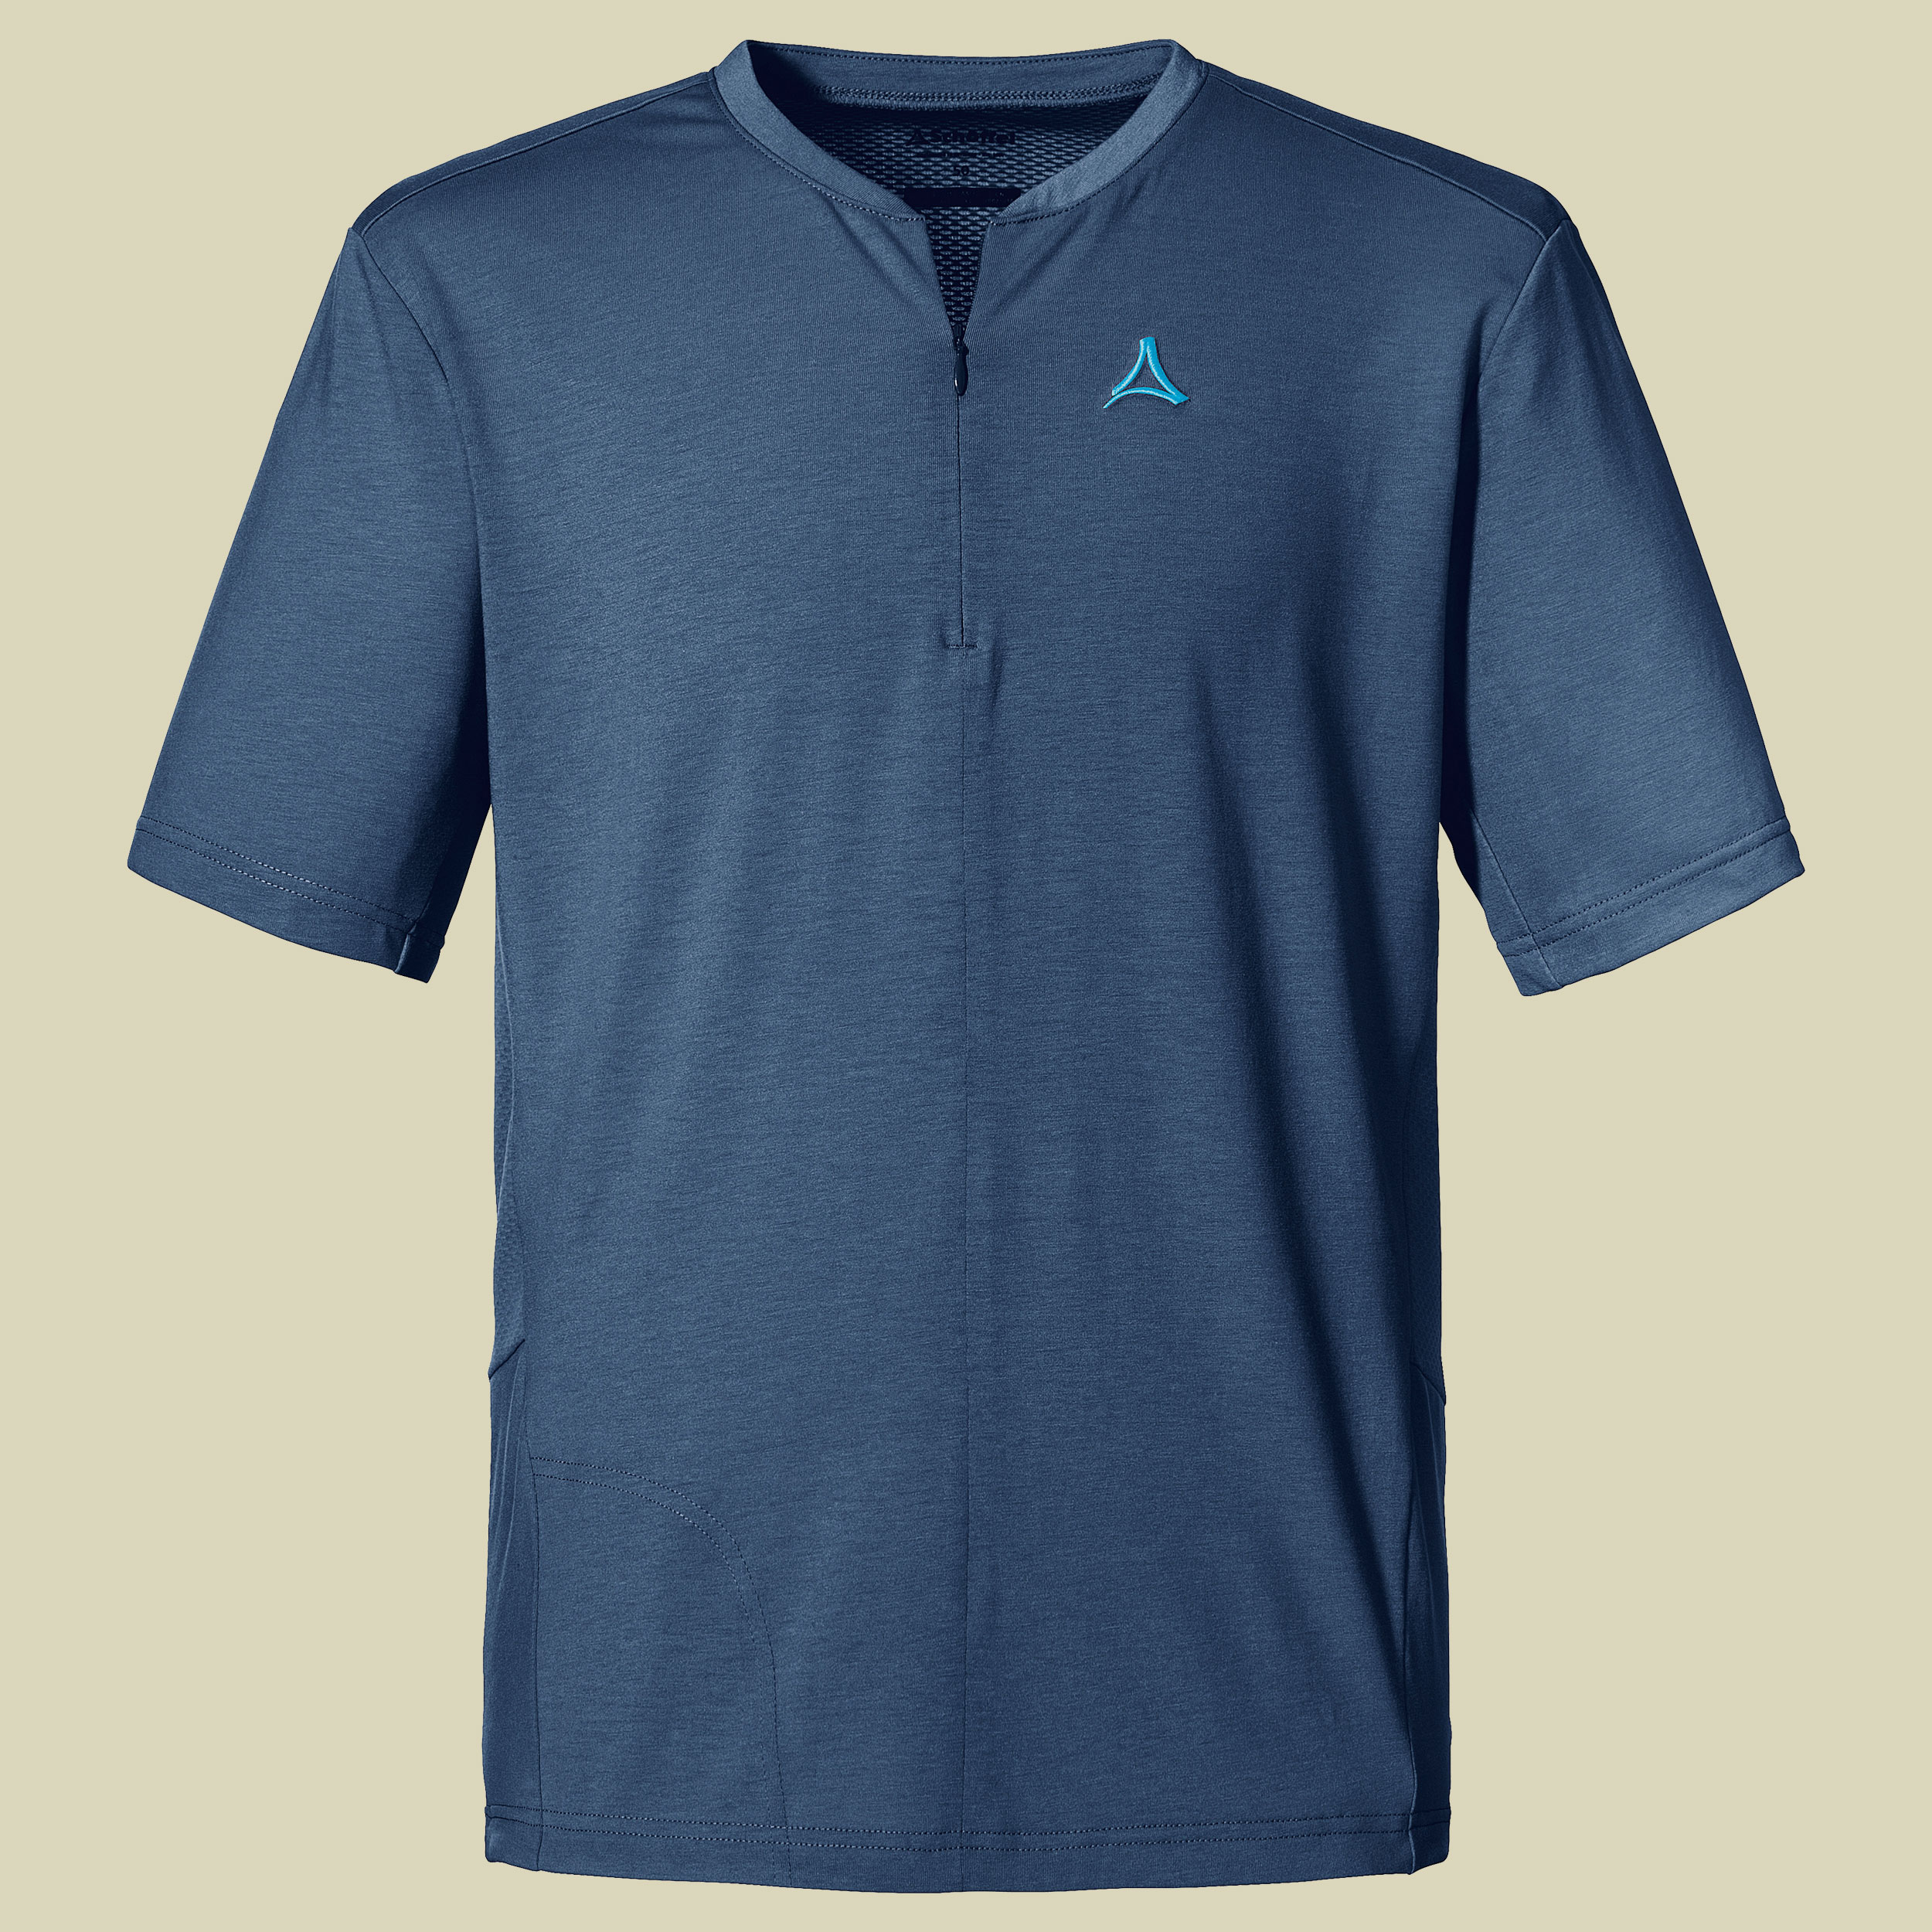 Alpe Adria Shirt Men Größe 52 Farbe moonlit ocean